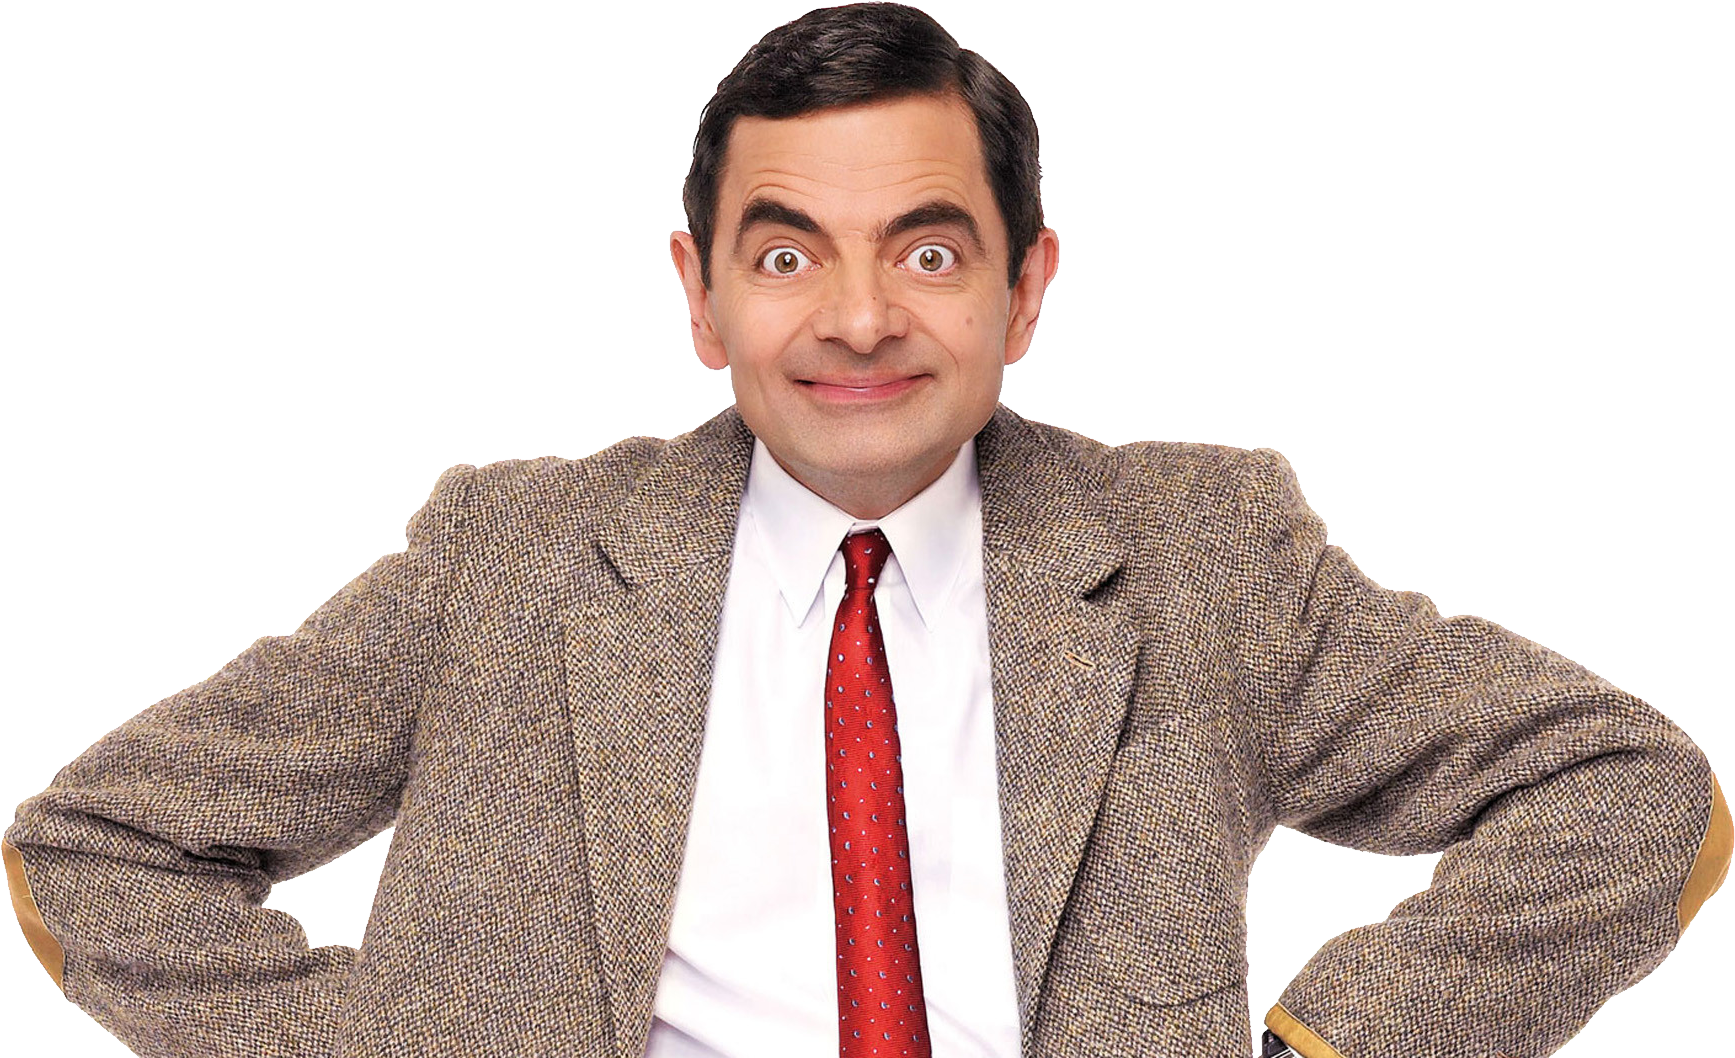 Mr. Bean Rowan Atkinson.